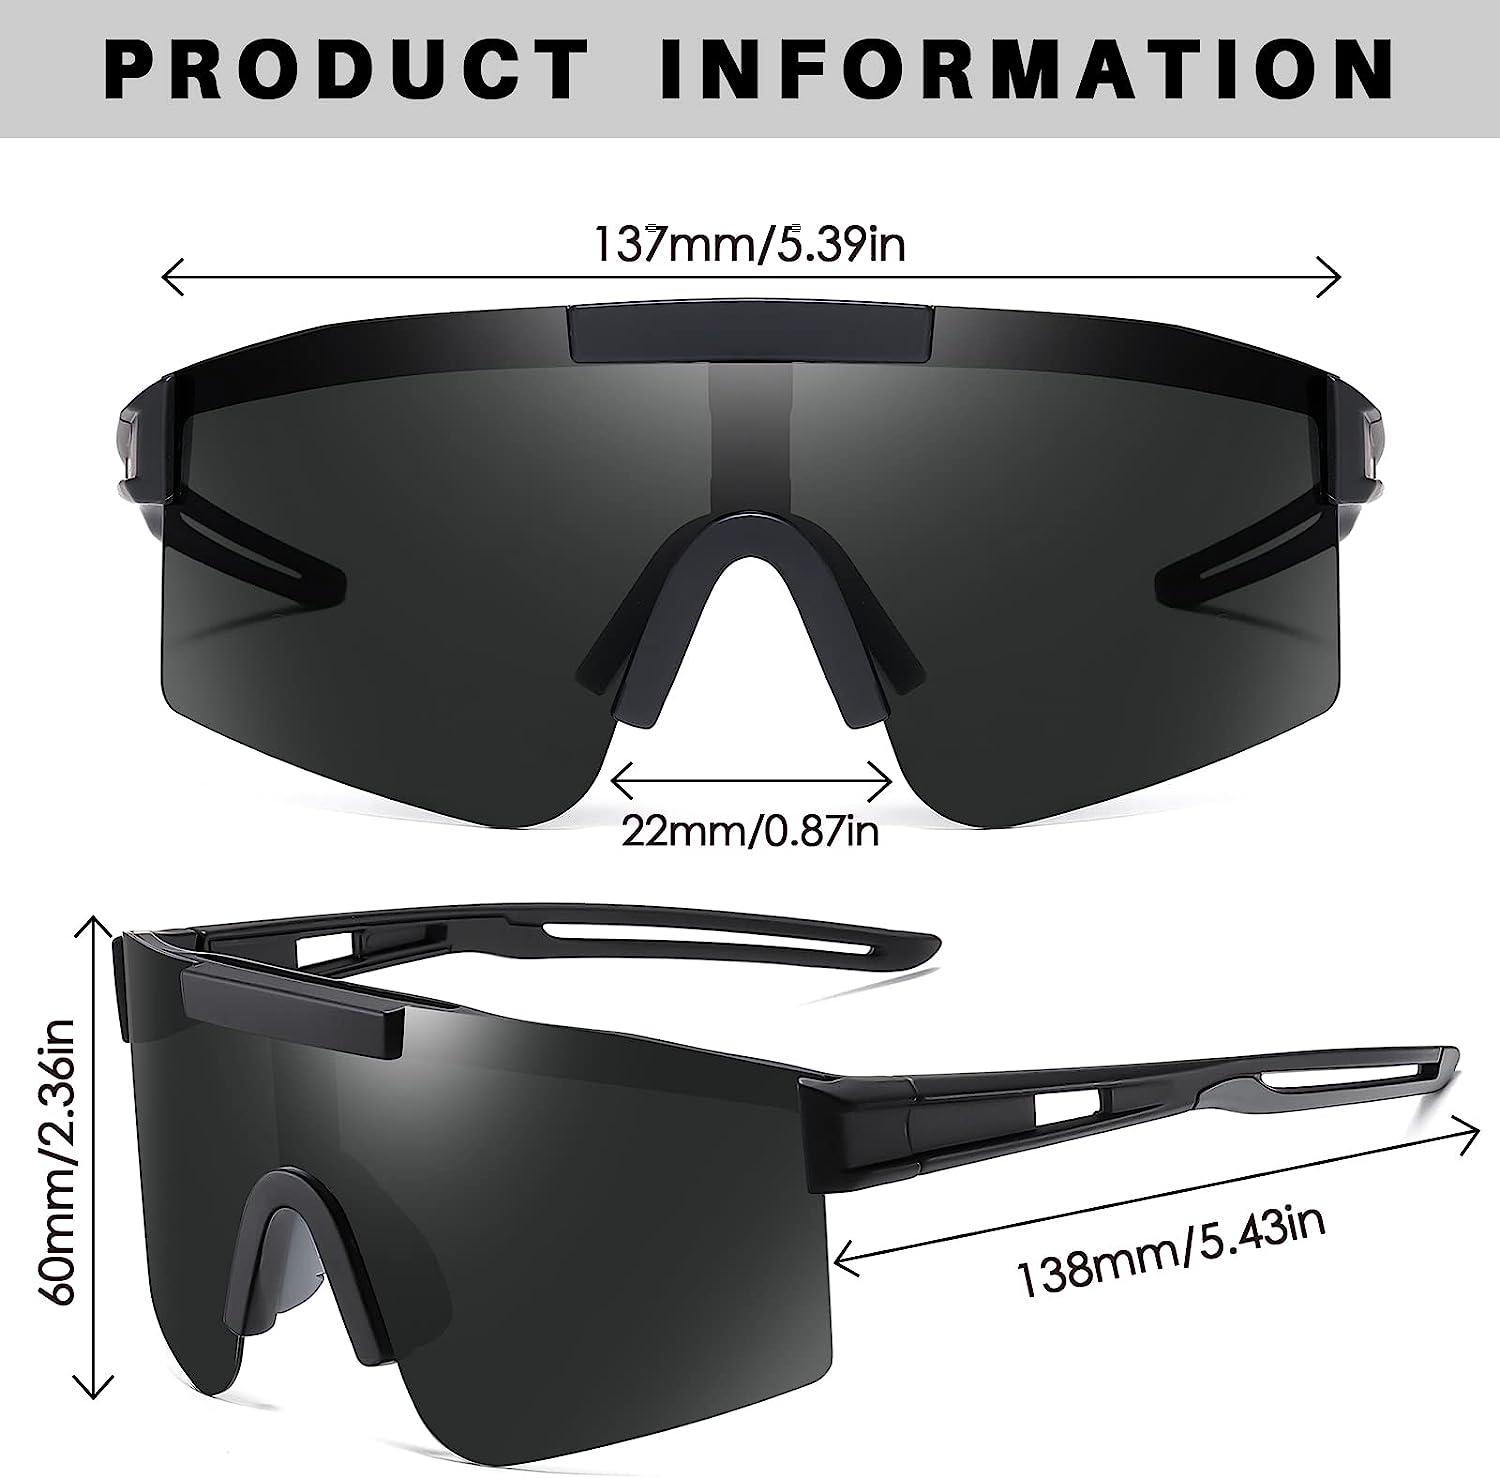 Accessories, Wrap Around Sunglasses Polarized 10 Uv400 Protection